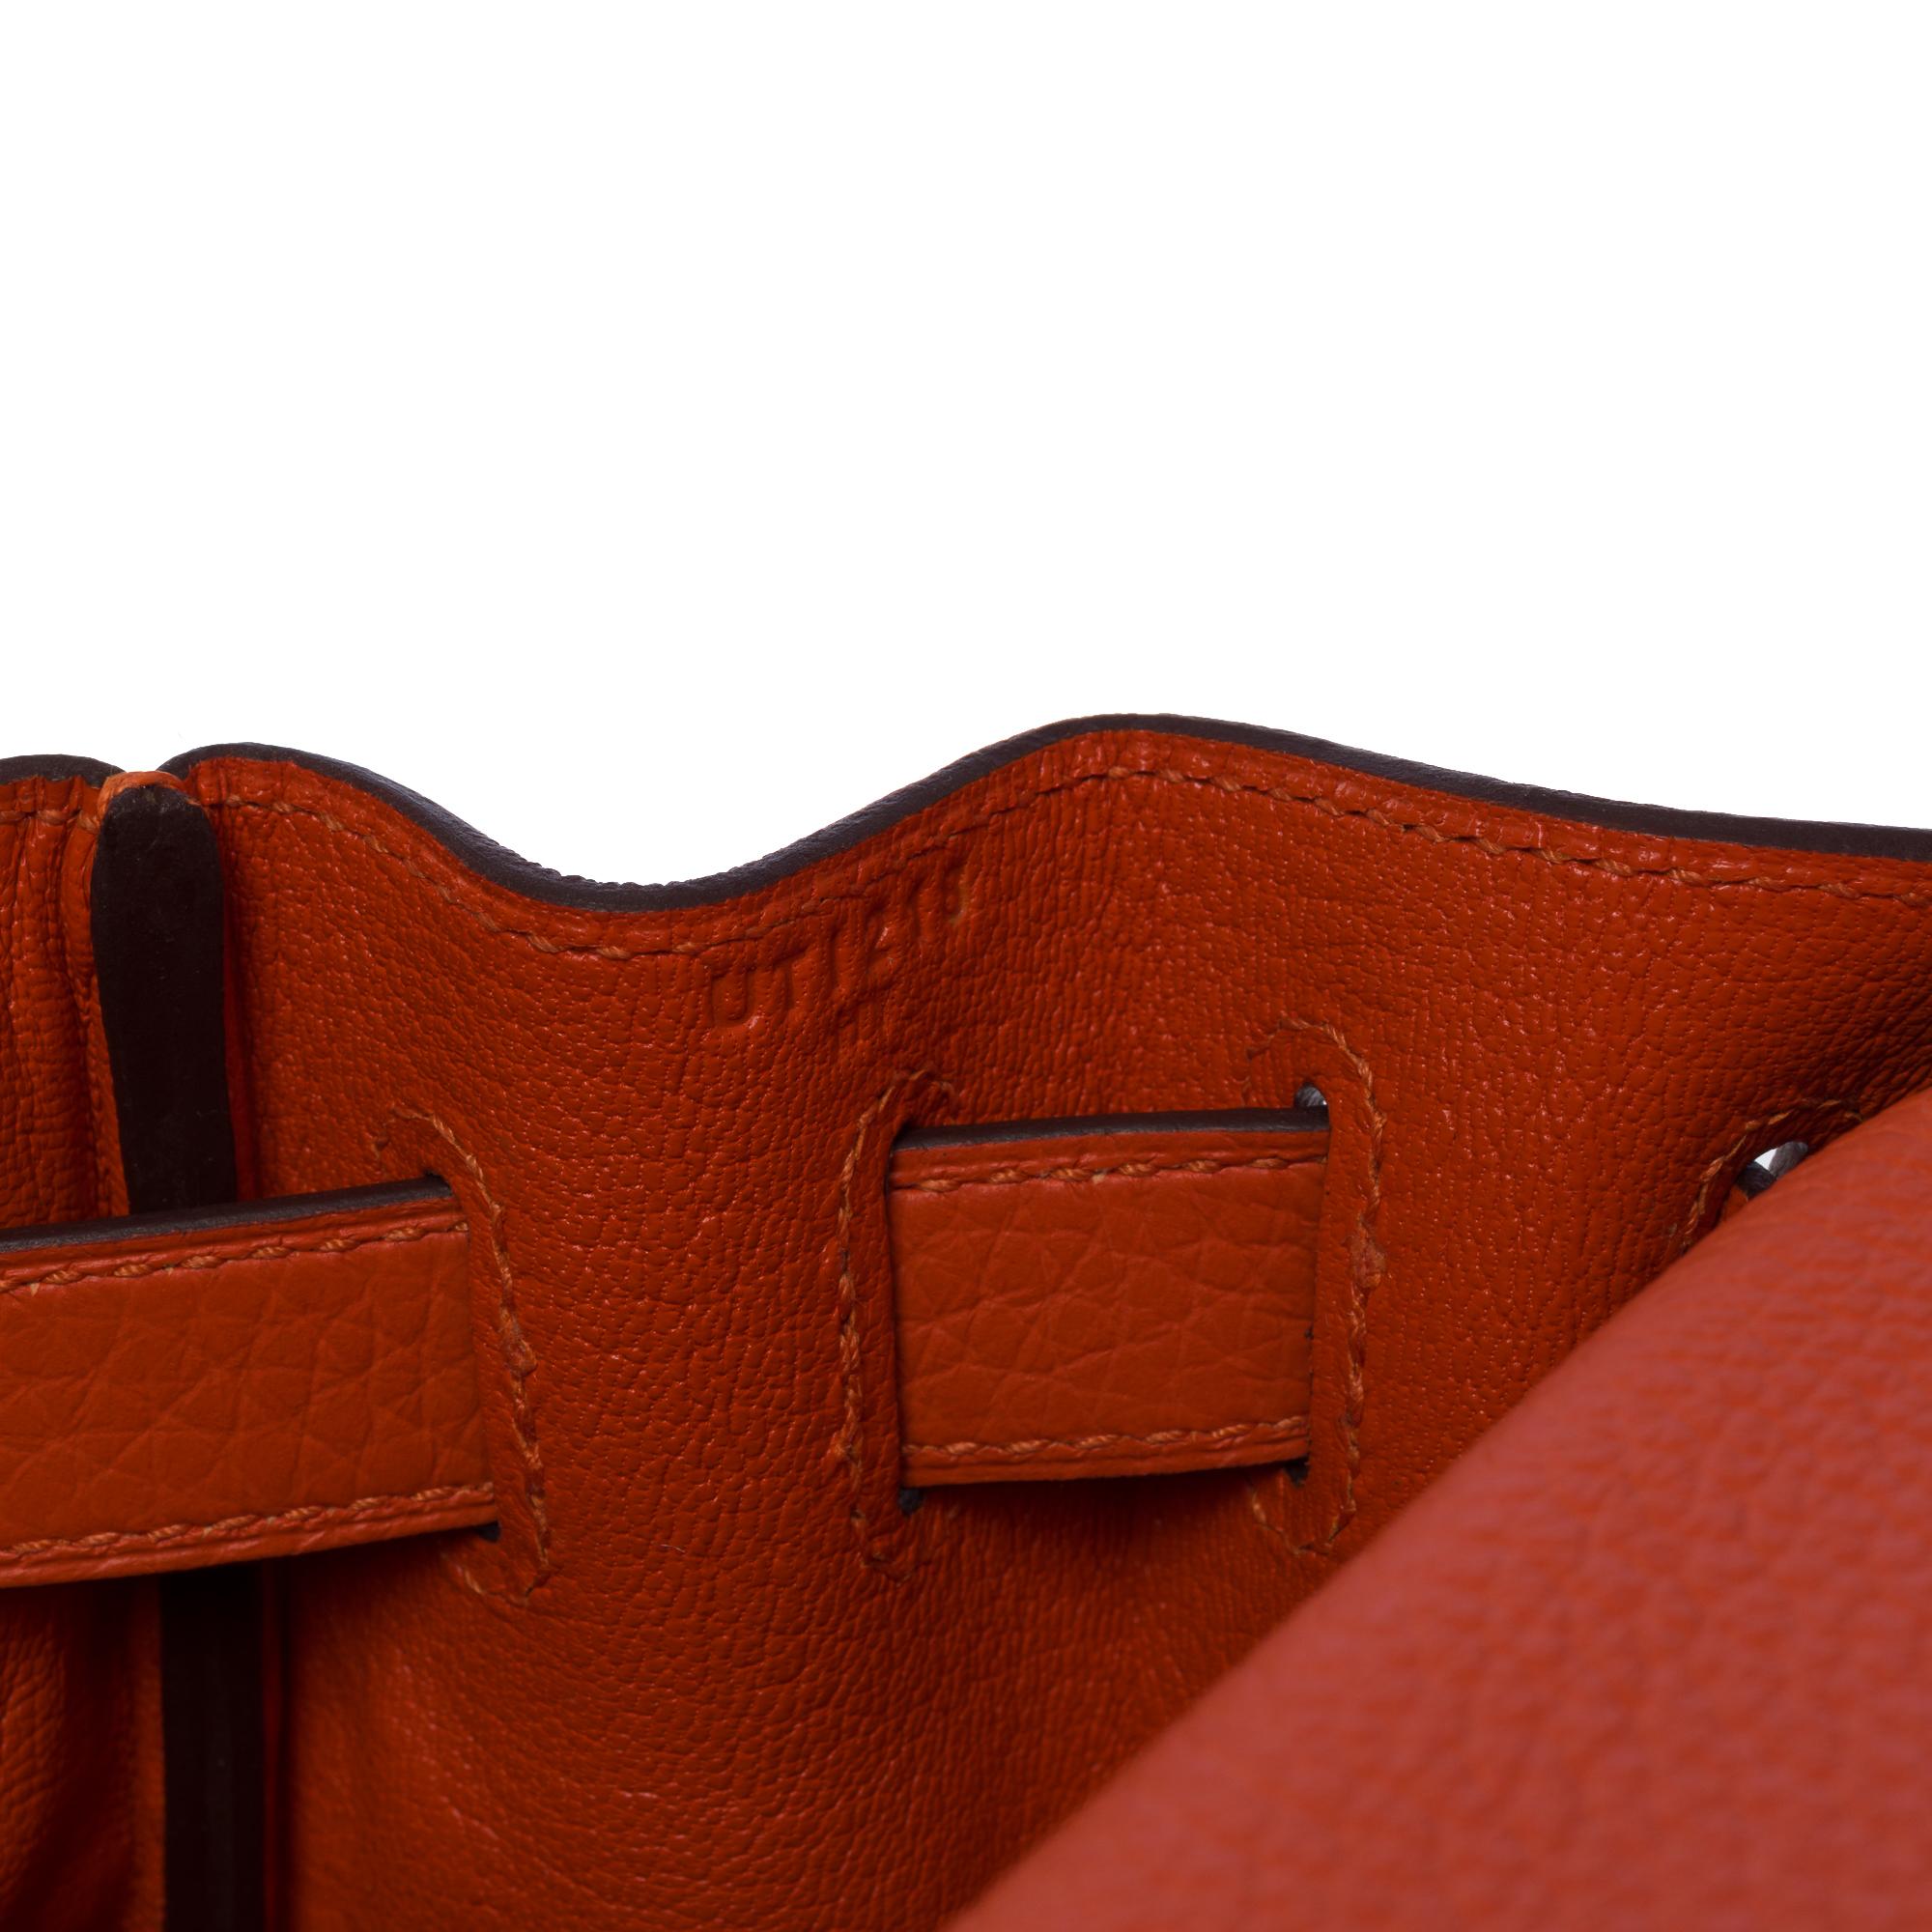 New Amazing Hermes Kelly 28 retourne handbag strap in Orange Feu leather, SHW For Sale 3